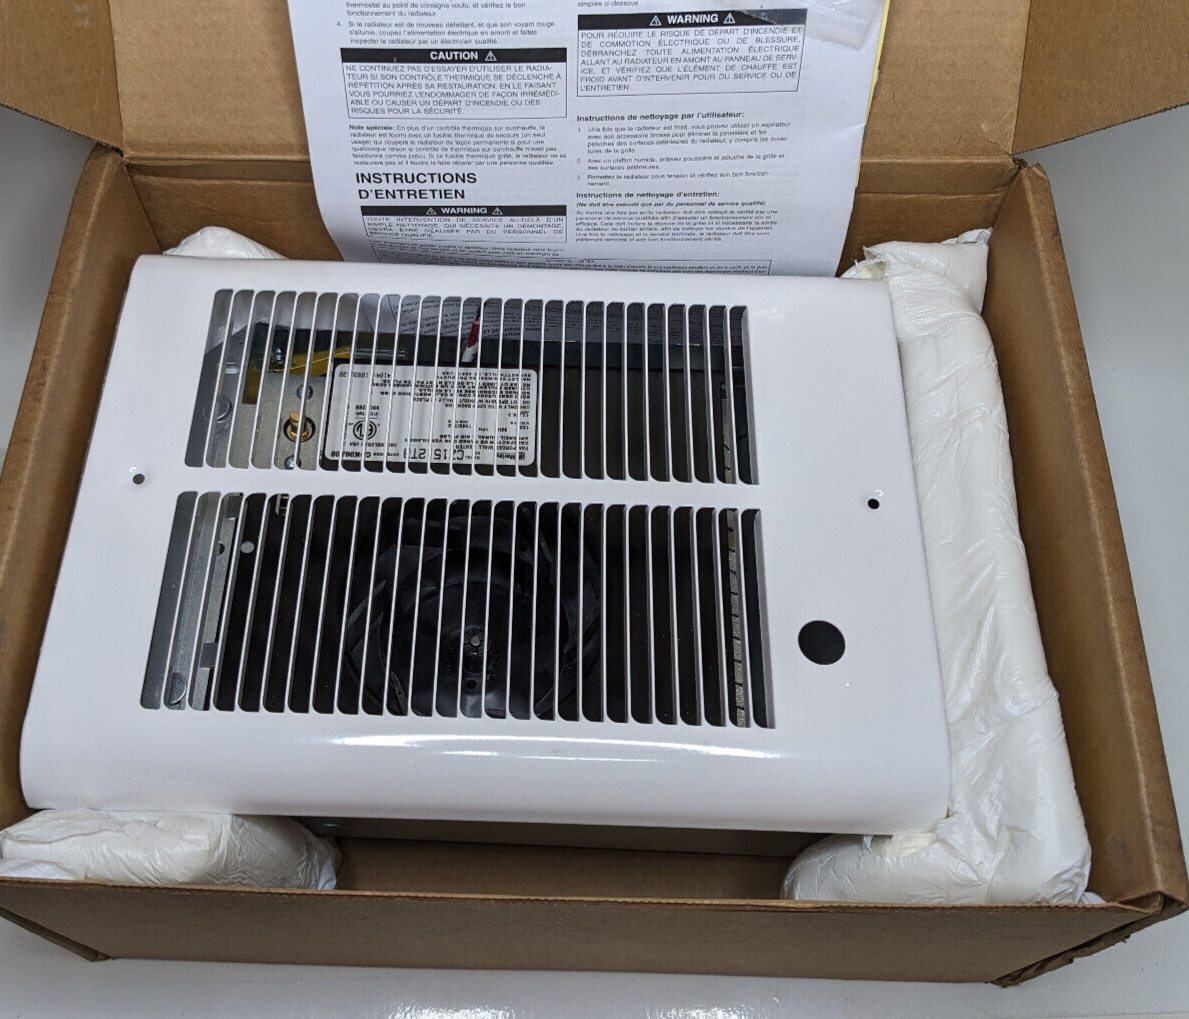 QMark Marley CZ1512T 120V 1500/750 Watts COS-E Fan Forced Wall Heater